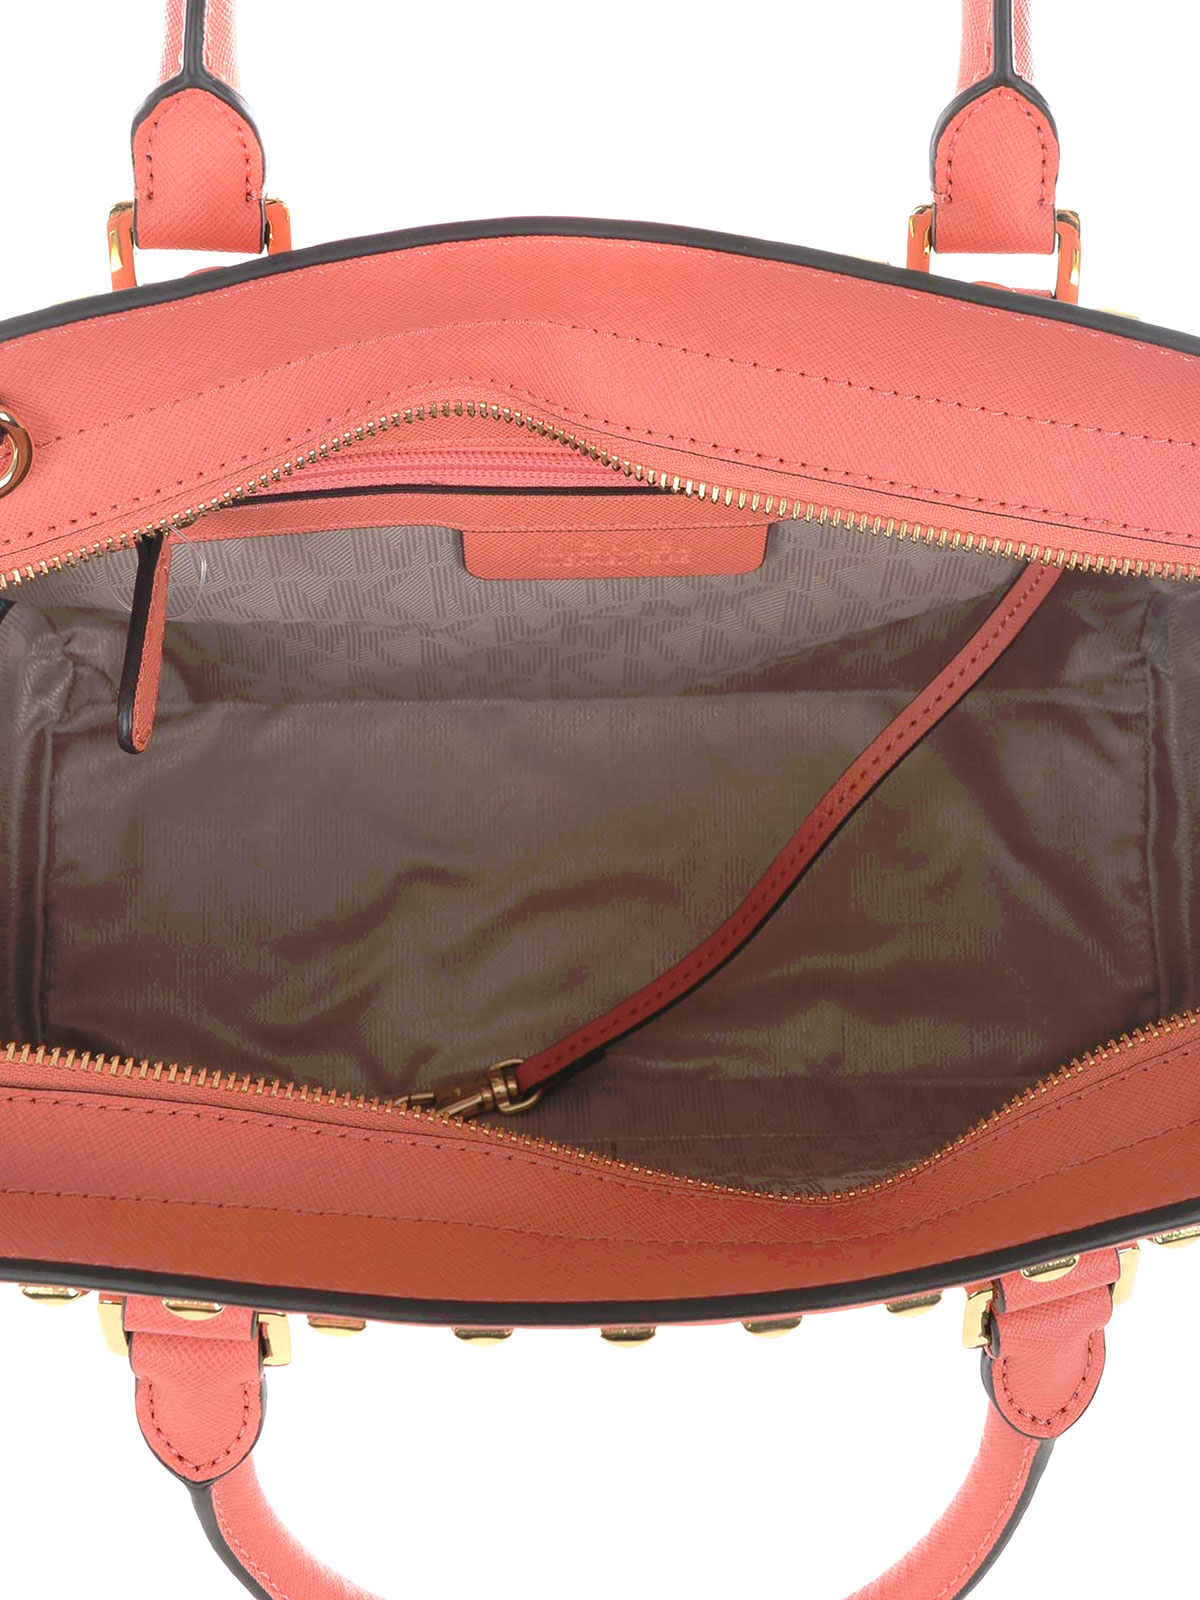 Michael Kors Selma Medium Studded Leather Messenger Bag Red